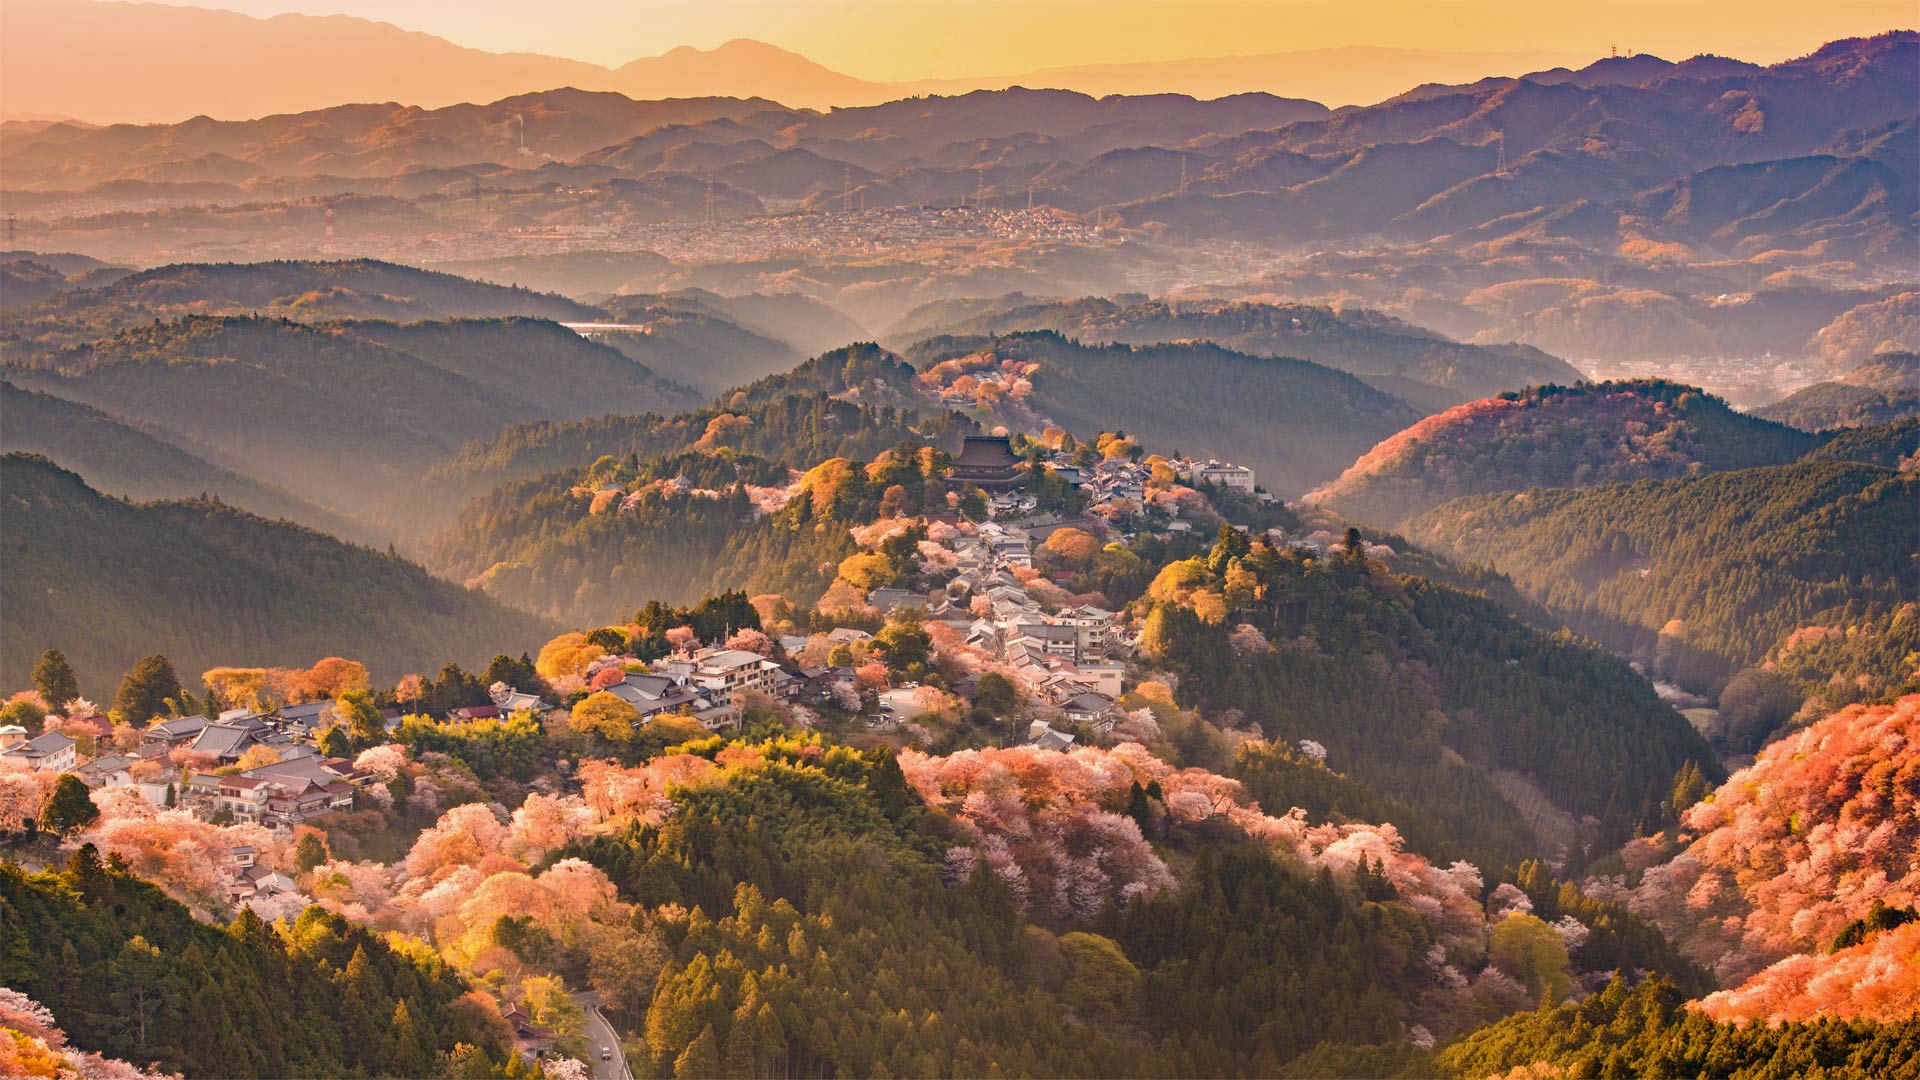 Mount Yoshino, Nara Prefecture, Japan - Sean Pavone/iStock/Getty Images Plus)